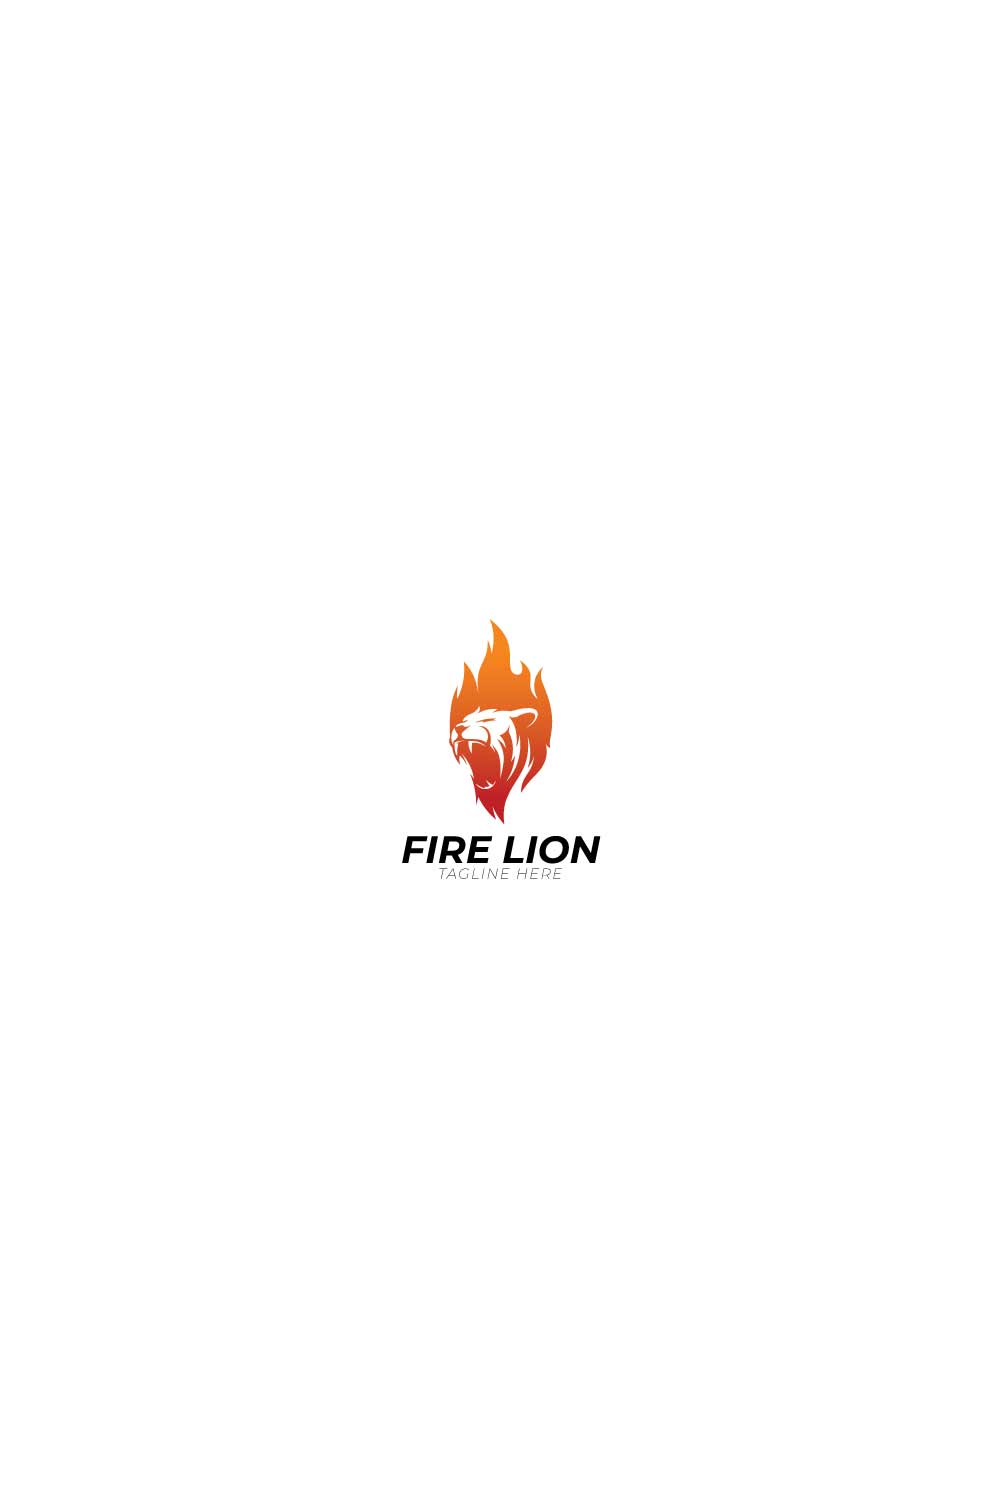 Initial Fire Lion logo pinterest preview image.